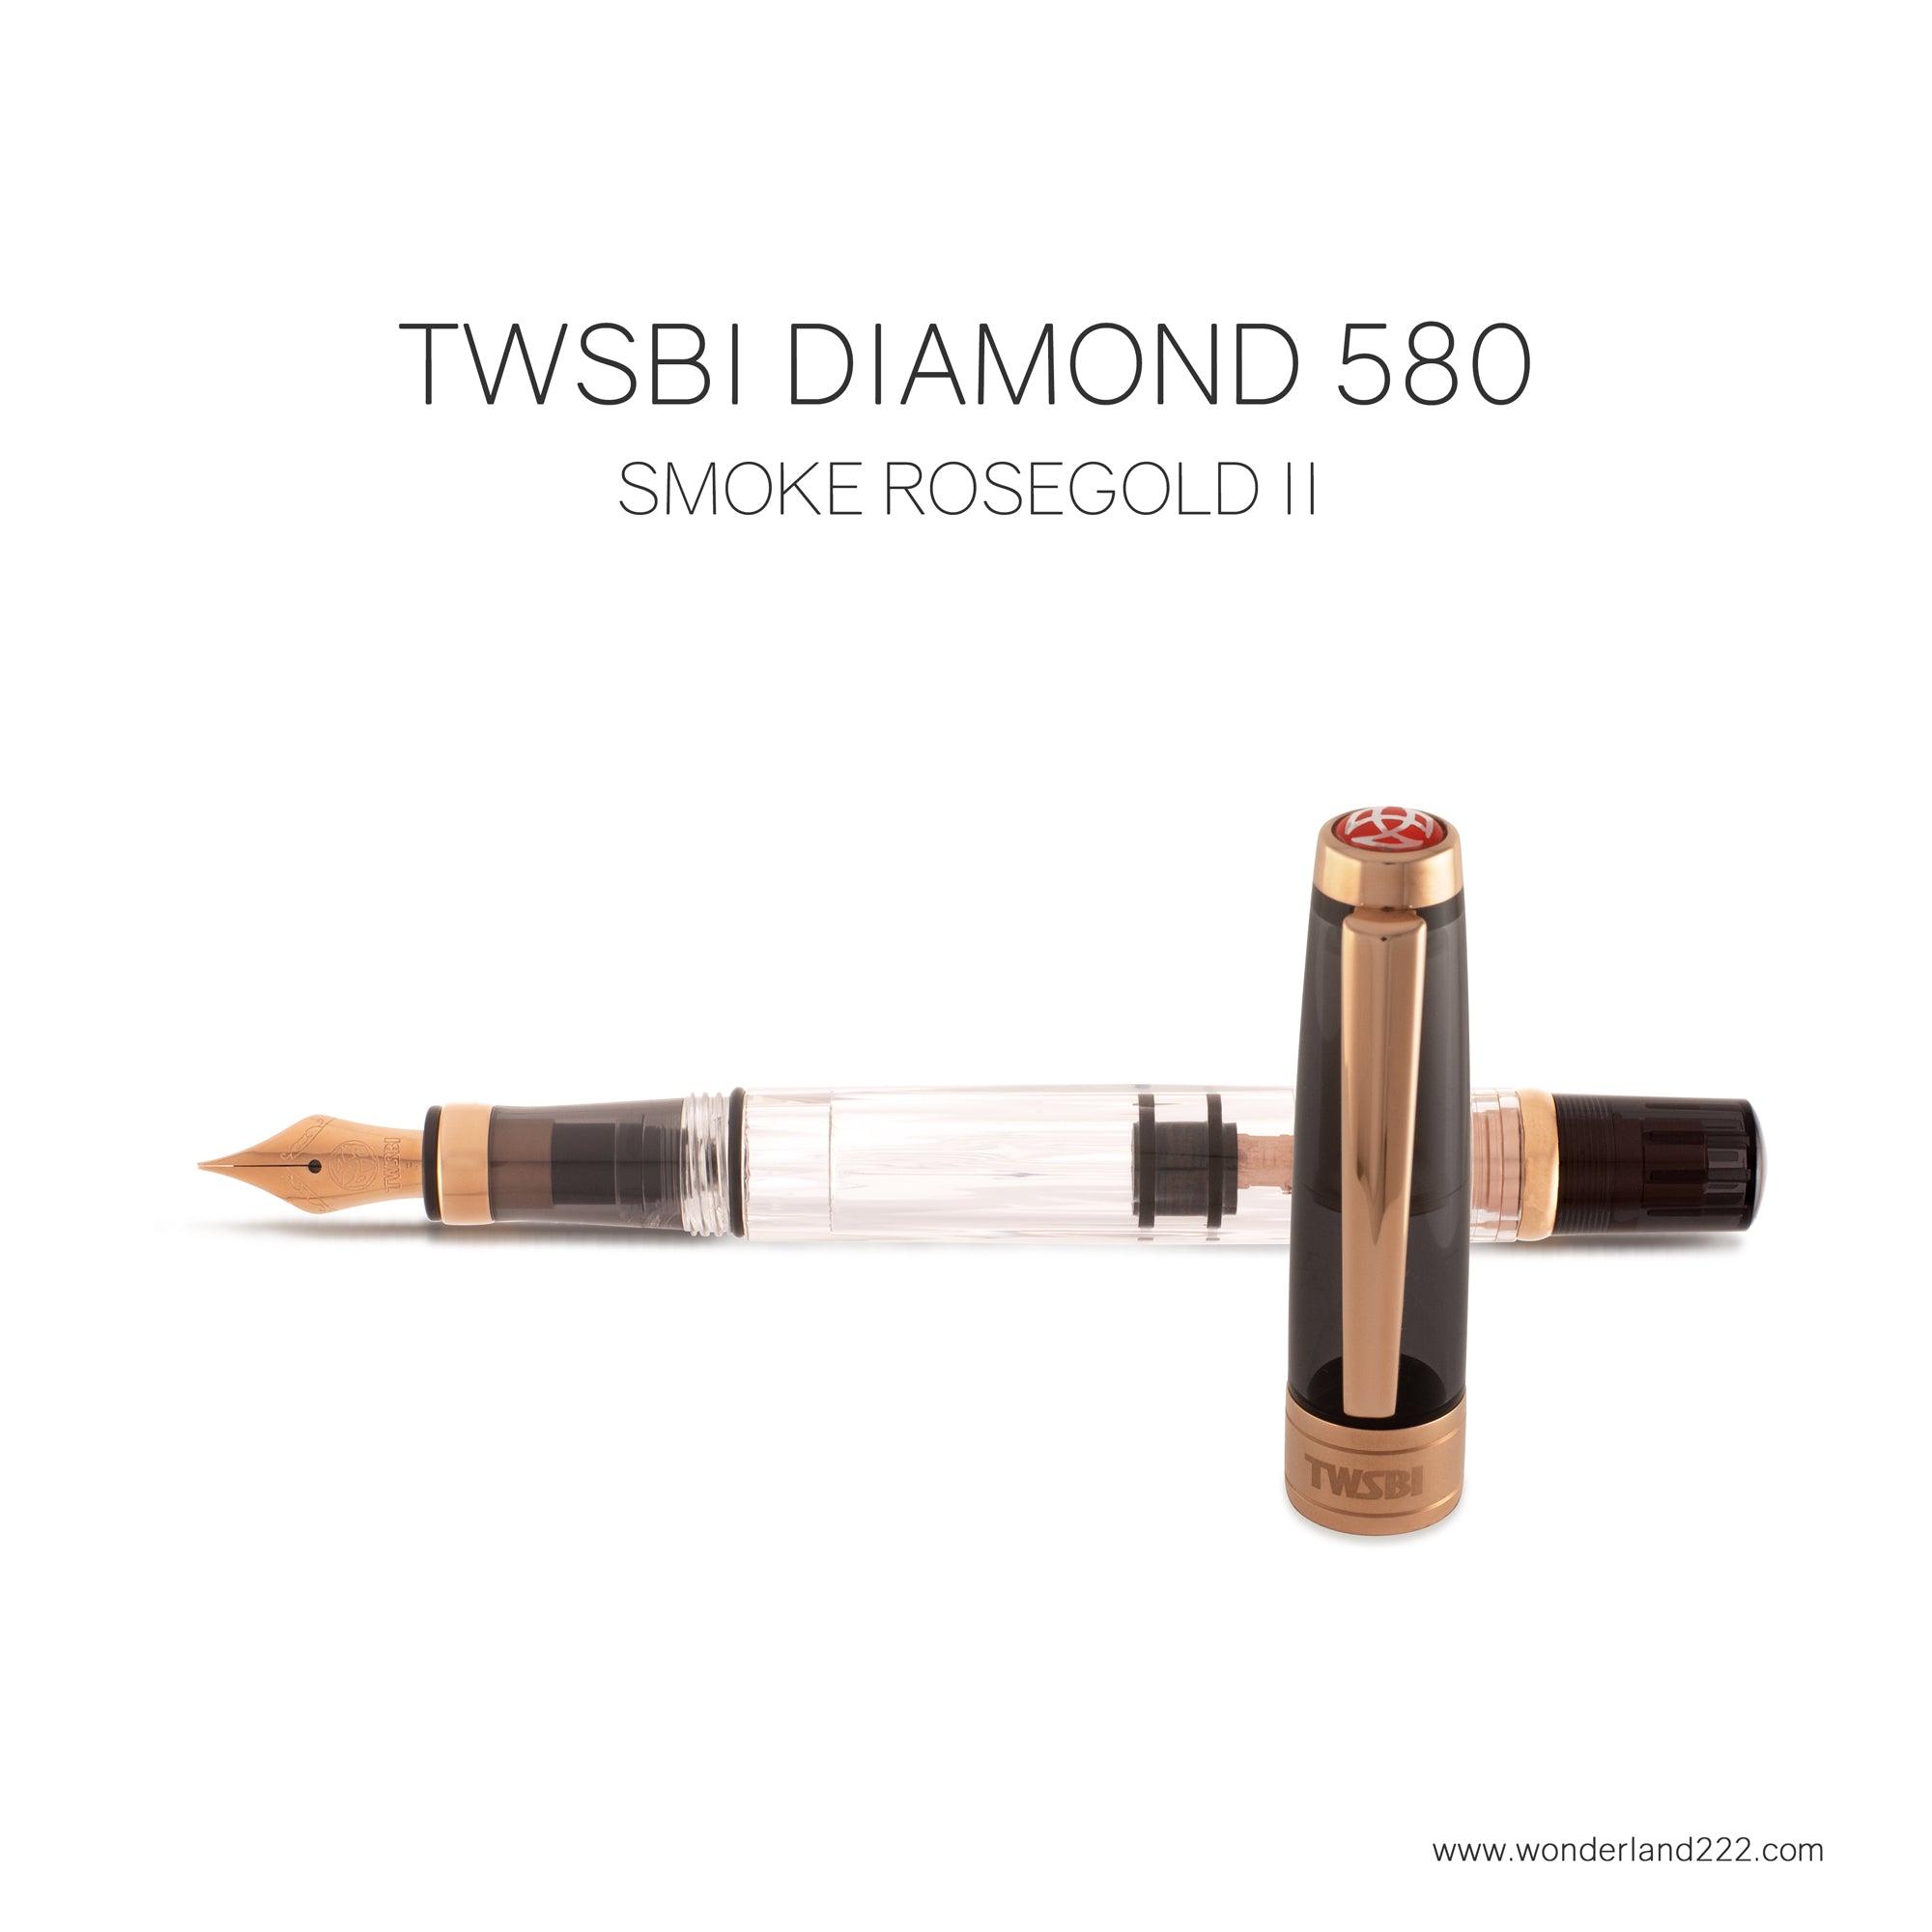 TWSBI-DIAMOND-580-SMOKE-ROSEGOLD-II-Image1.jpg